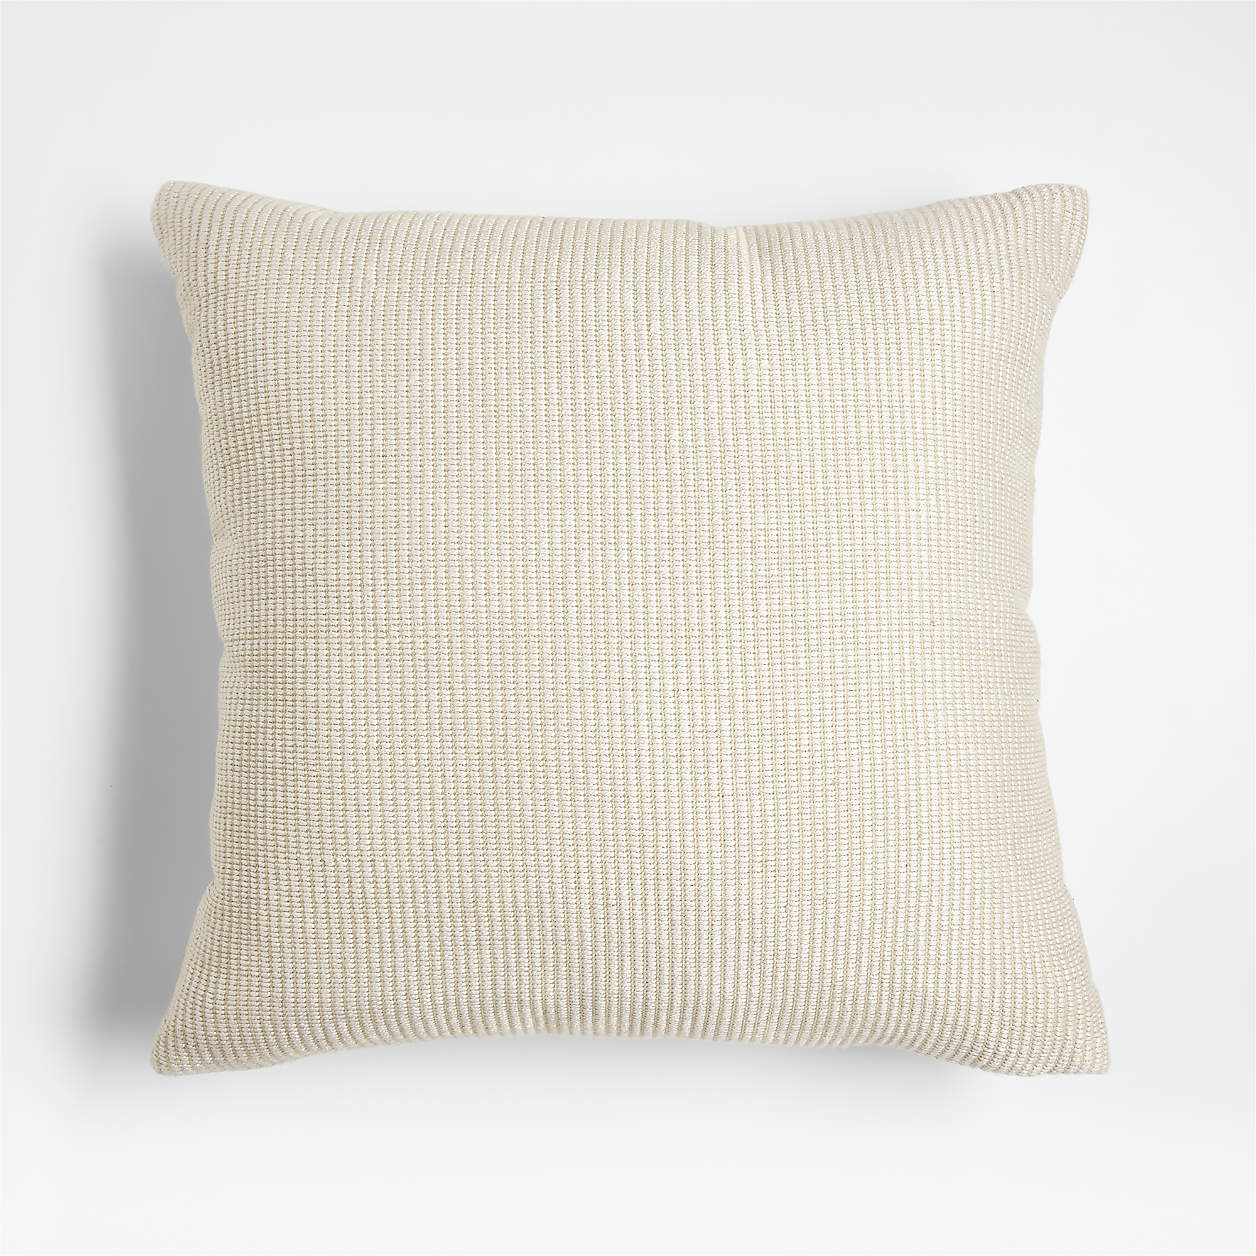 Deep Indigo Blue 20"x20" Soft Textured Indoor/Outdoor Throw Pillow